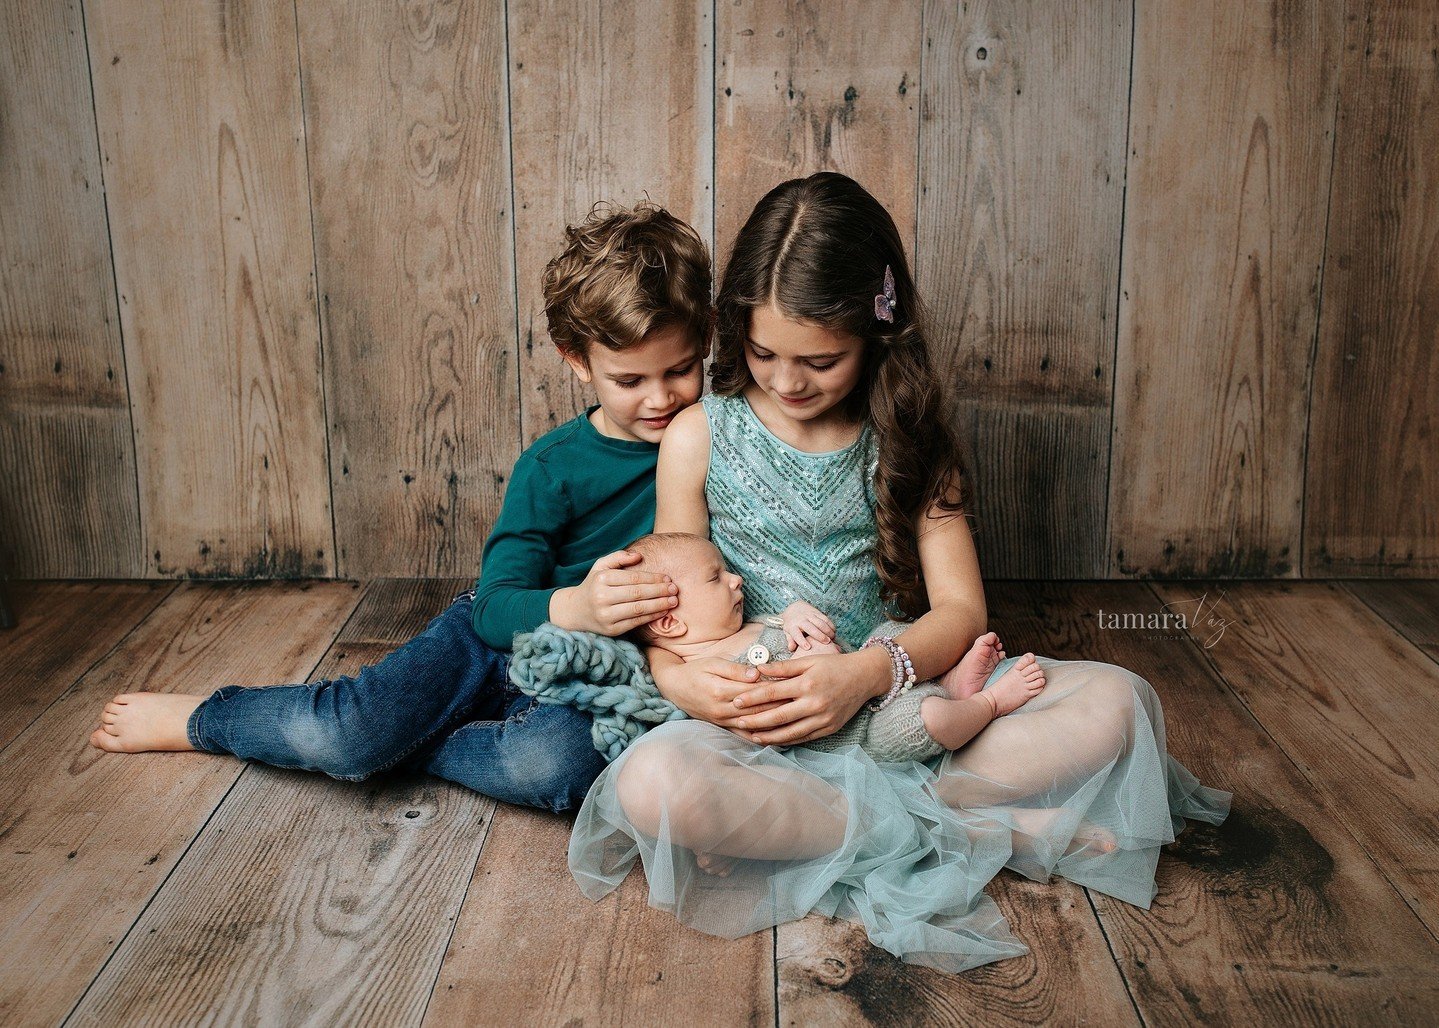 Sibling love 😍⁠
⁠
⁠
⁠
 #newbornphotography #baby #newbornphotographer #newborn #newbornsession #studiosession #photography⁠
#babydetails ⁠
njphotographer #newjersey #njfamilyphotographer #portraits #nj #njkids #njchildphotographer #njportraitphotogr